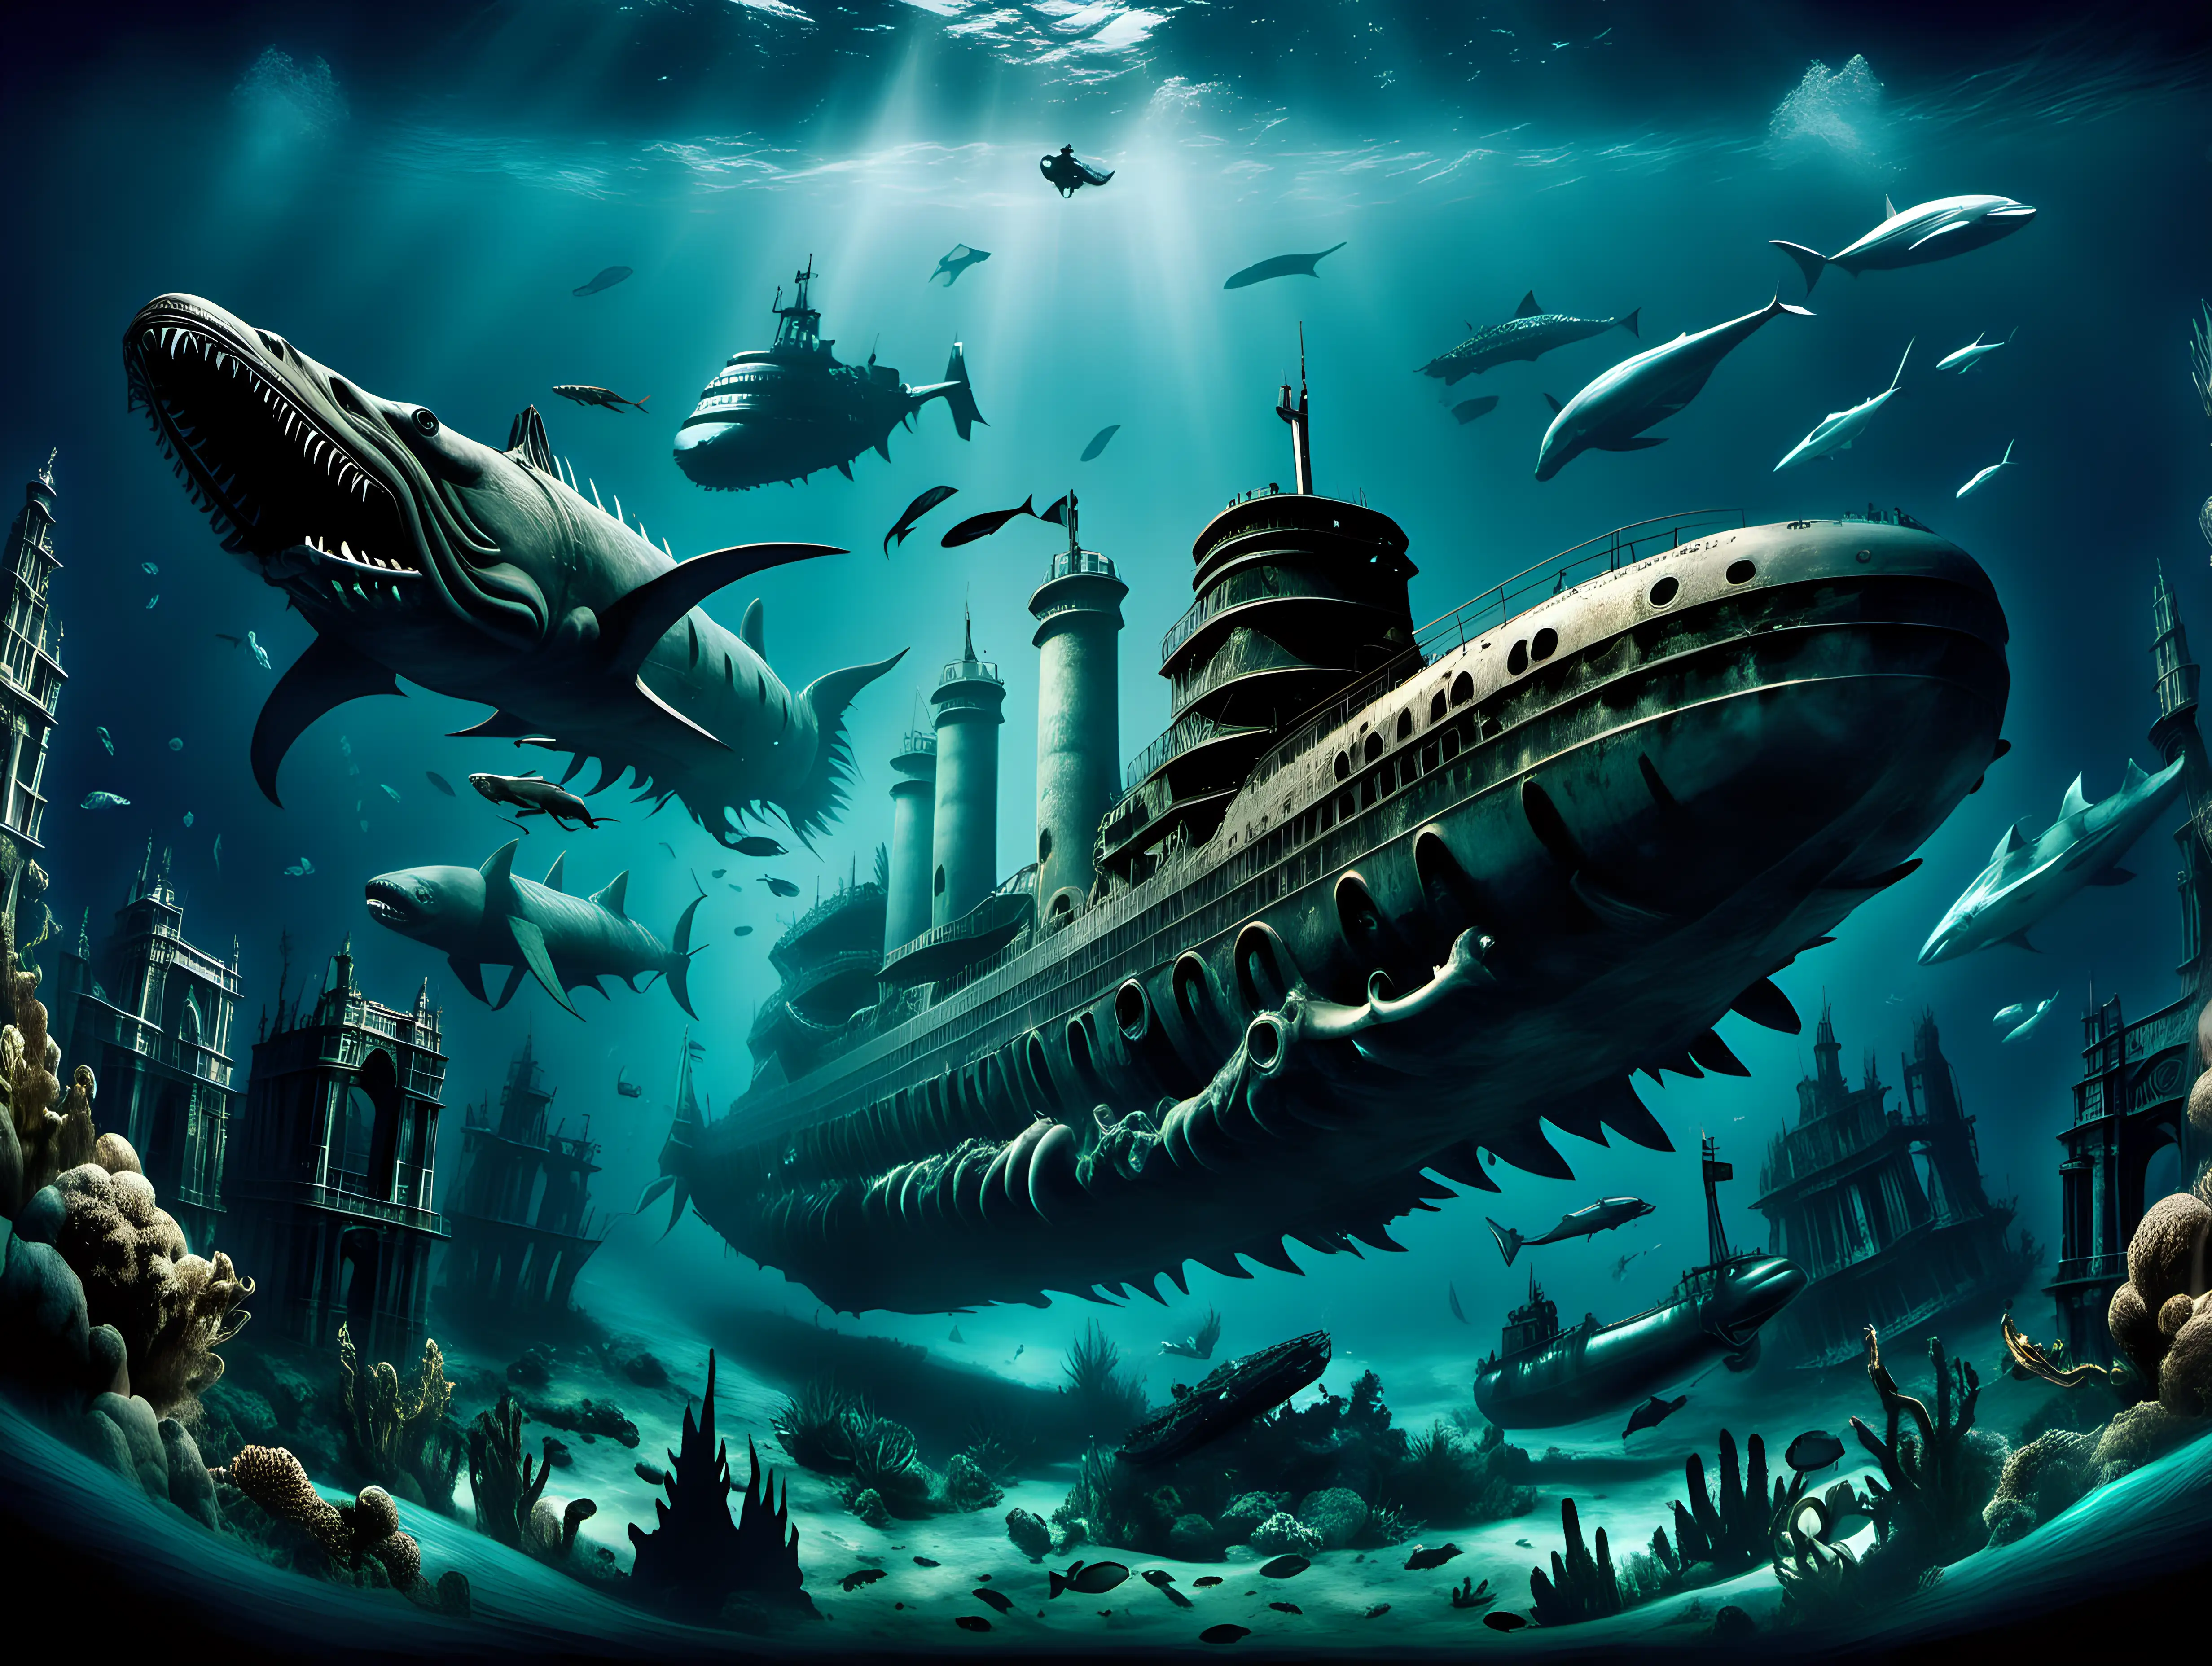 Mystical Atlantis Exploration Discovering Sea Monsters and Submarine Wrecks